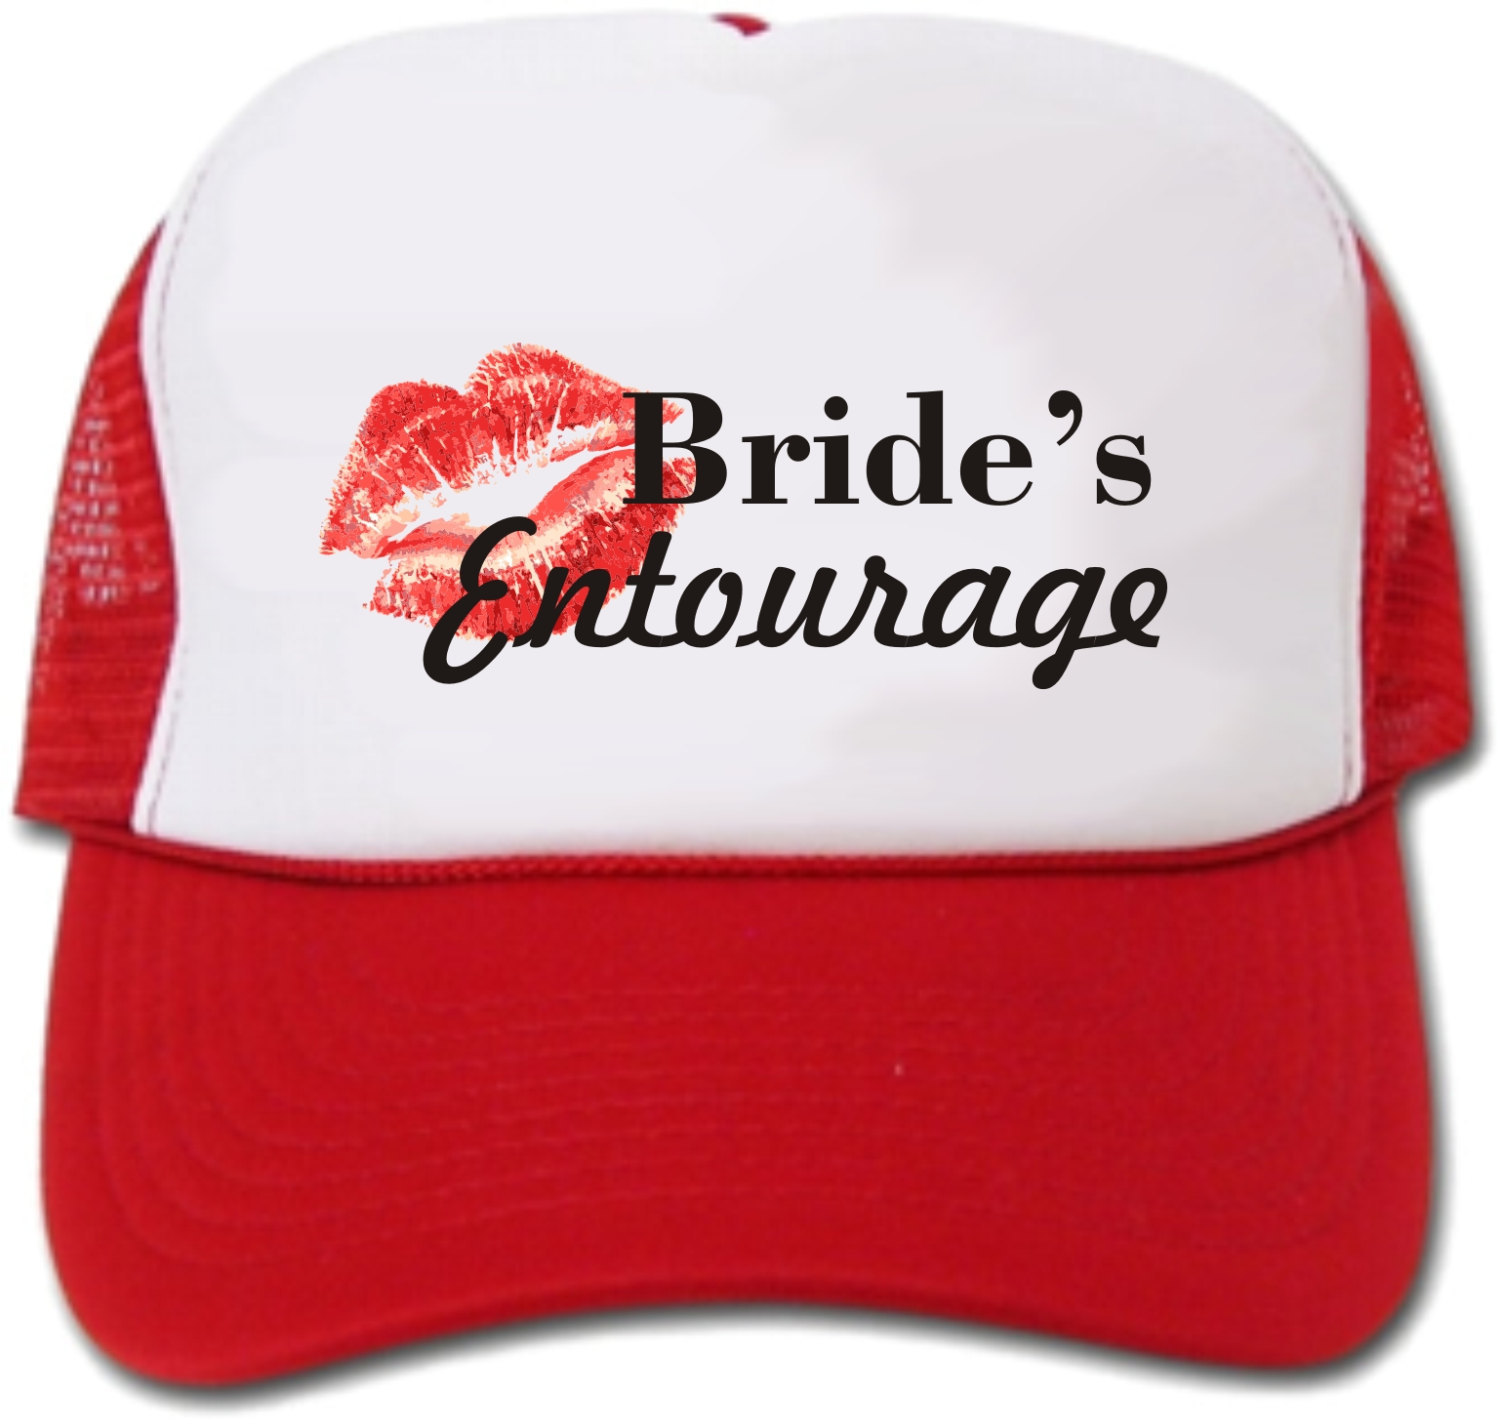 Bride's Entourage Hat/Cap